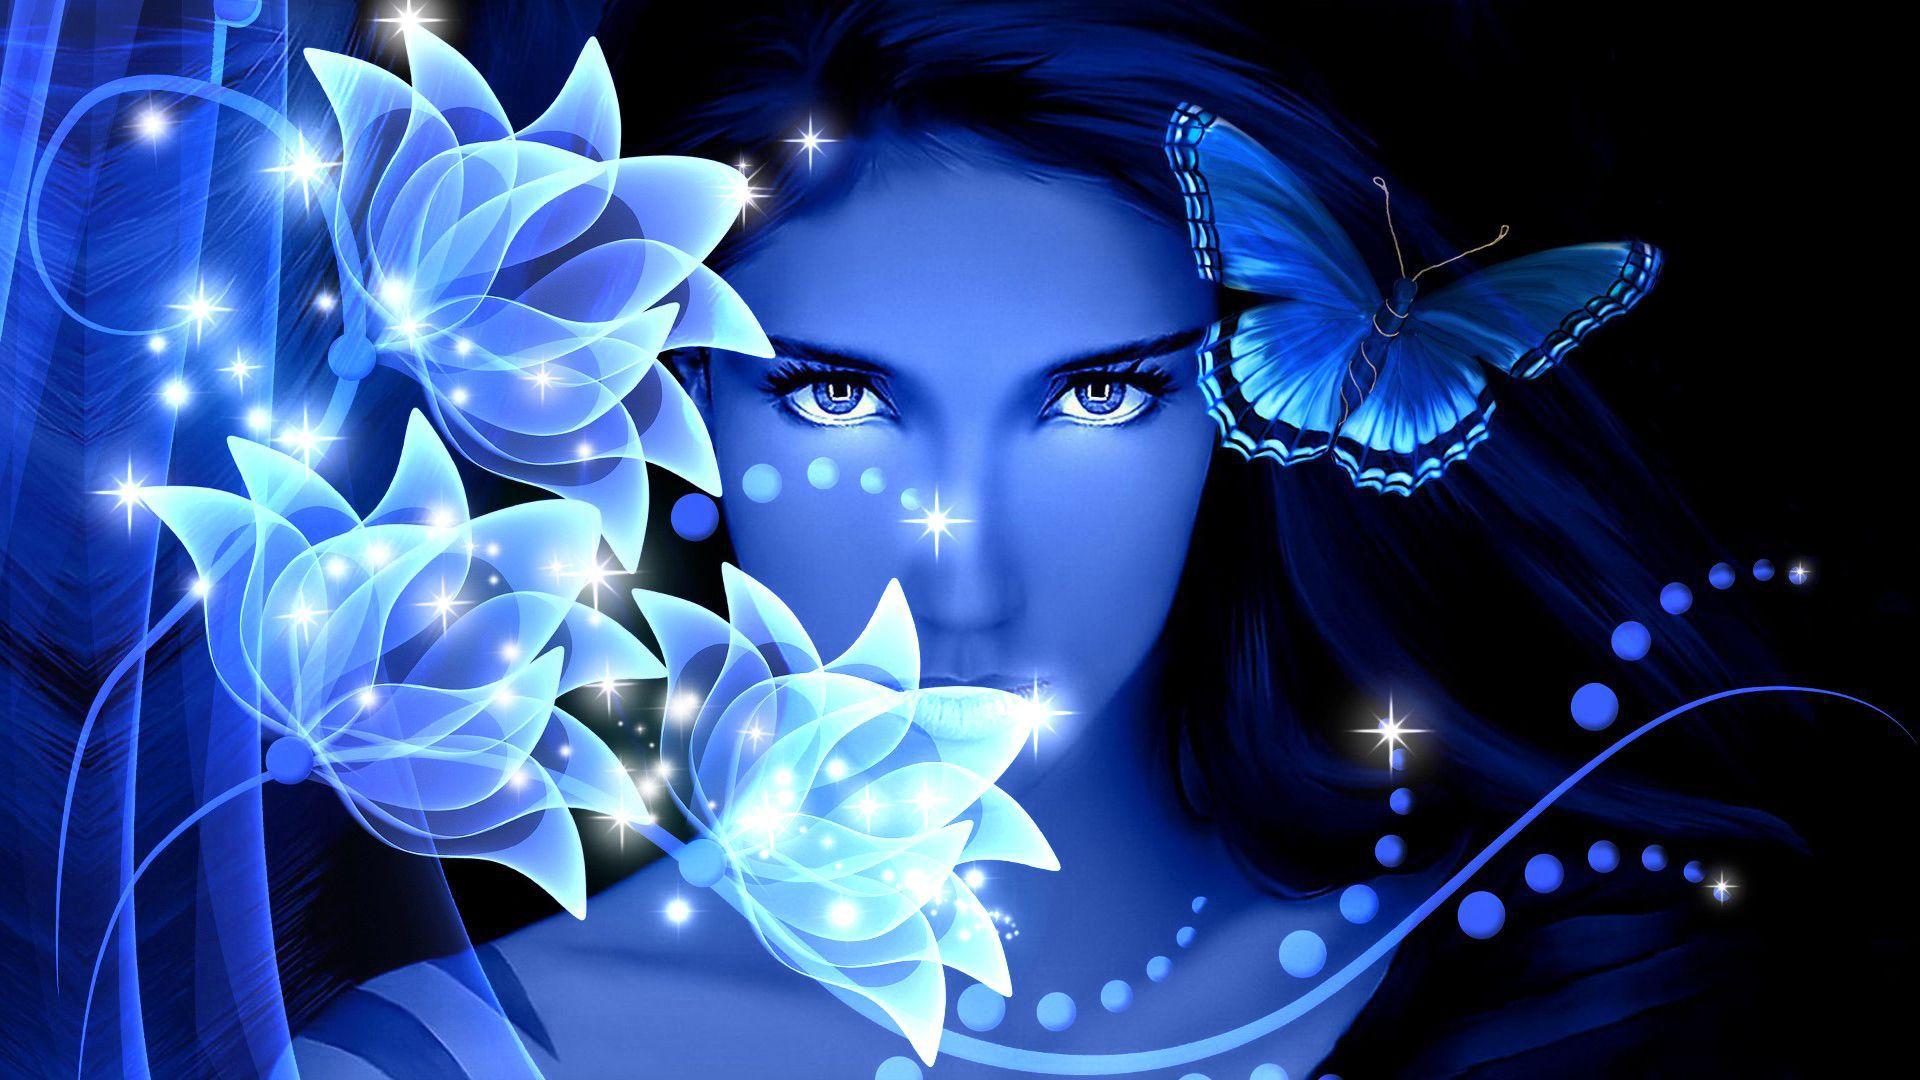 Blue Butterfly On White Stones Desktop Background Wallpaper Hd